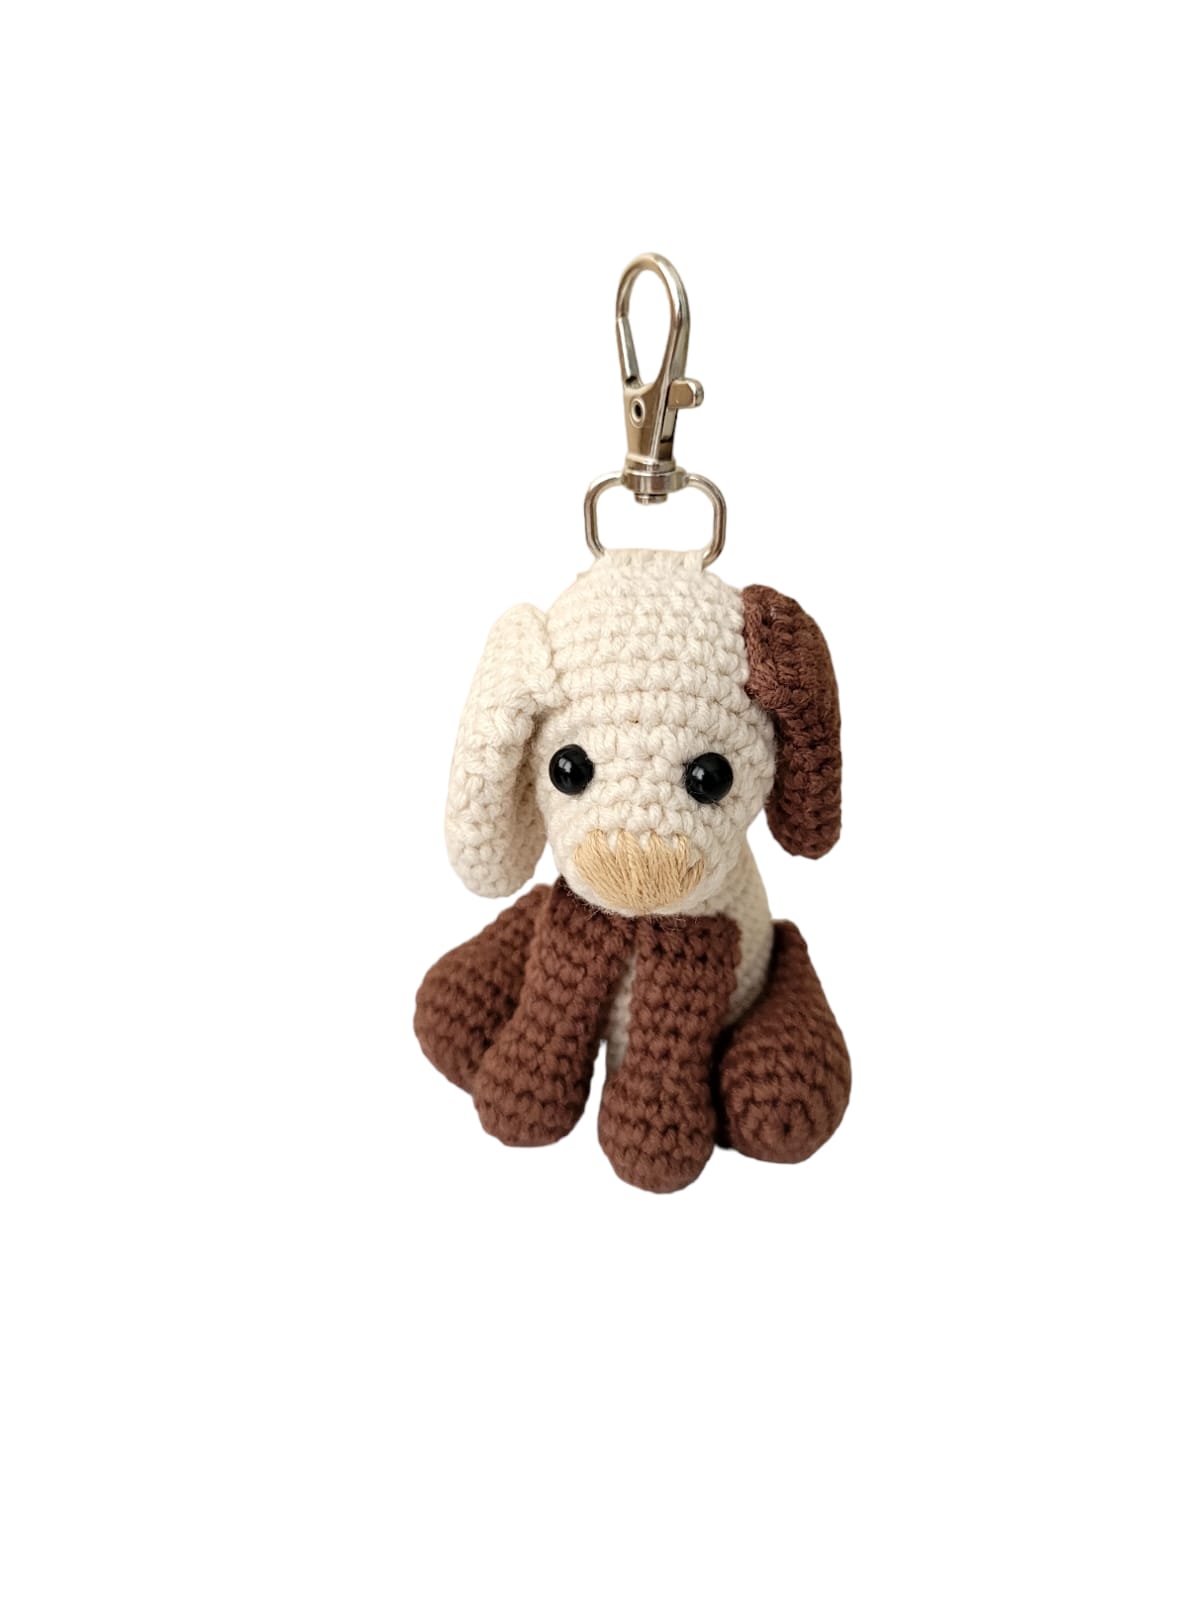 Key Ring: Dog bag Charm, Crochet Dog, Crochet Puppy, Crochet Keychain, Dog Keychain, Amigurumi Keychain, Bag Accessory, Backpack Accessory, Handmade Keychain